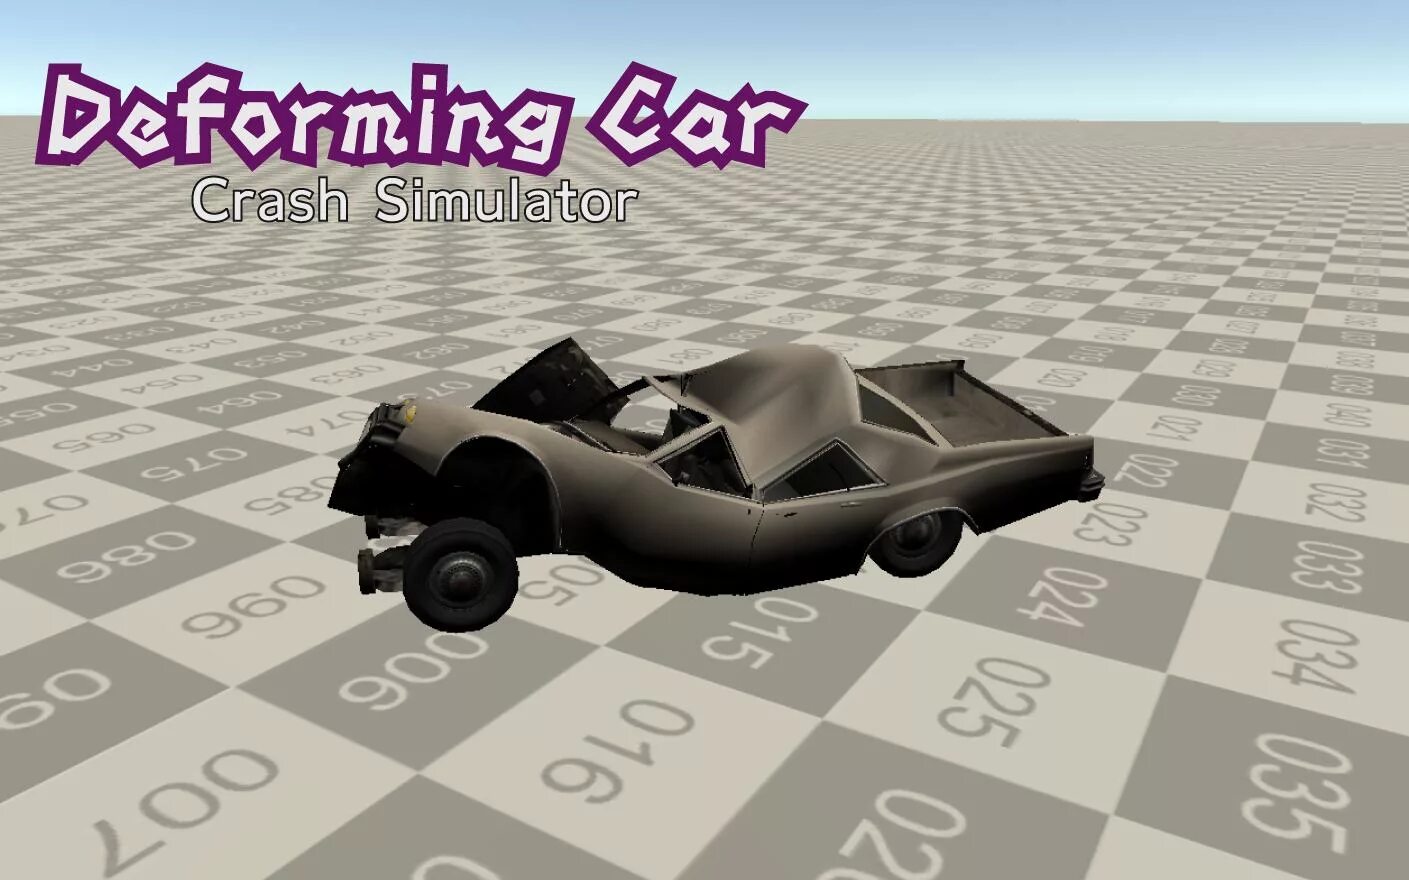 Crushing cars игра. Дефарминг кар краш 2. Deforming car crash Simulator. Кар краш симулятор моды. Deforming car crash.